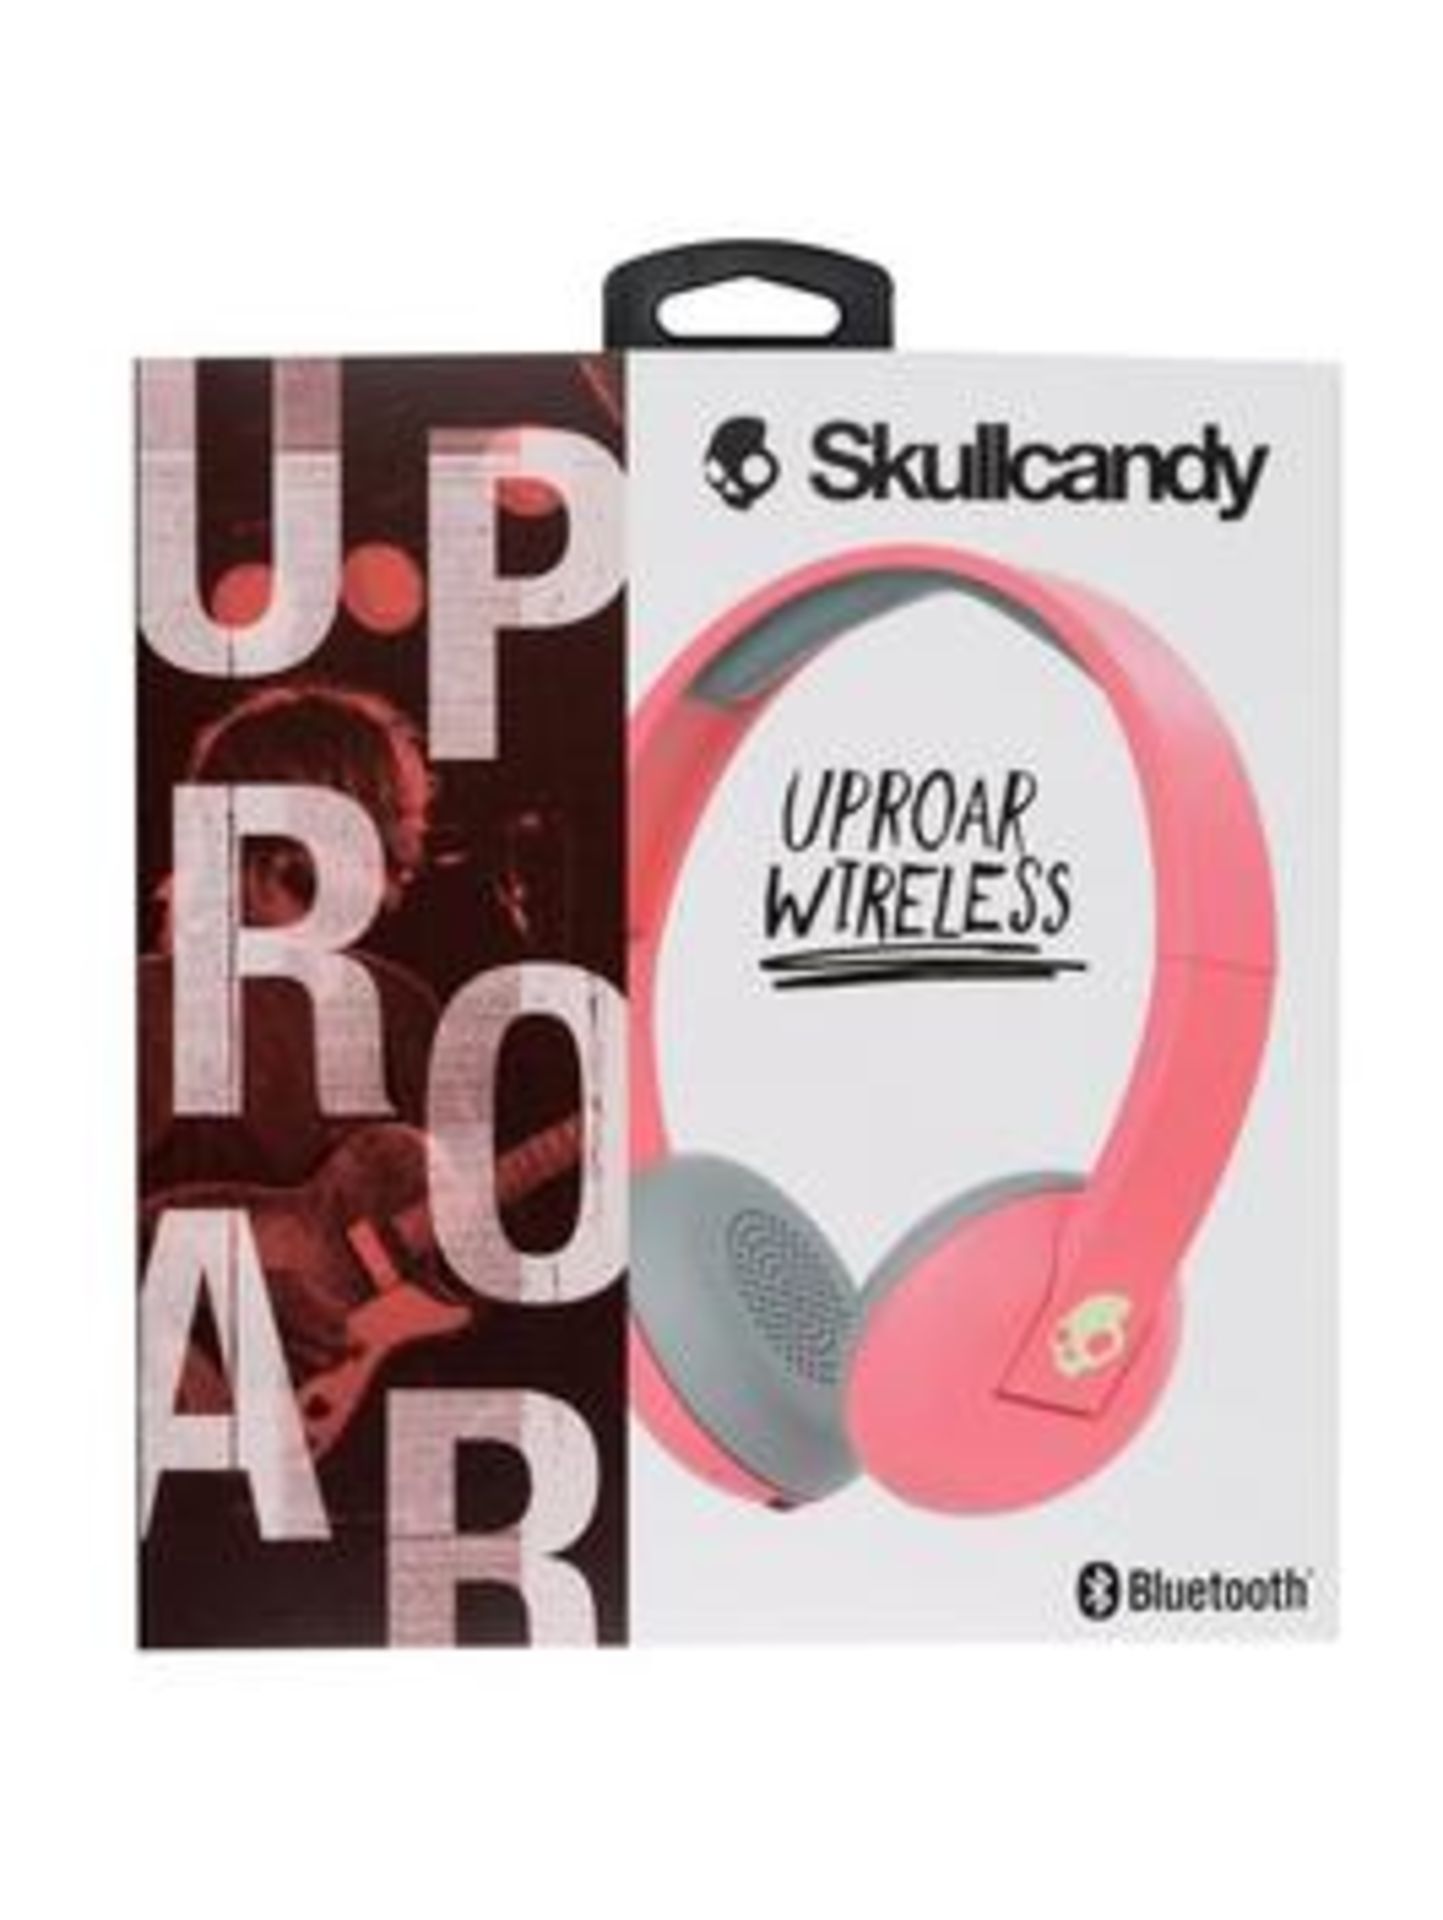 V Brand New Skullcandy Uproar Wireless On-Ear Headphones - Bluetooth Connectivitiy - 10 Hour Battery - Image 6 of 6